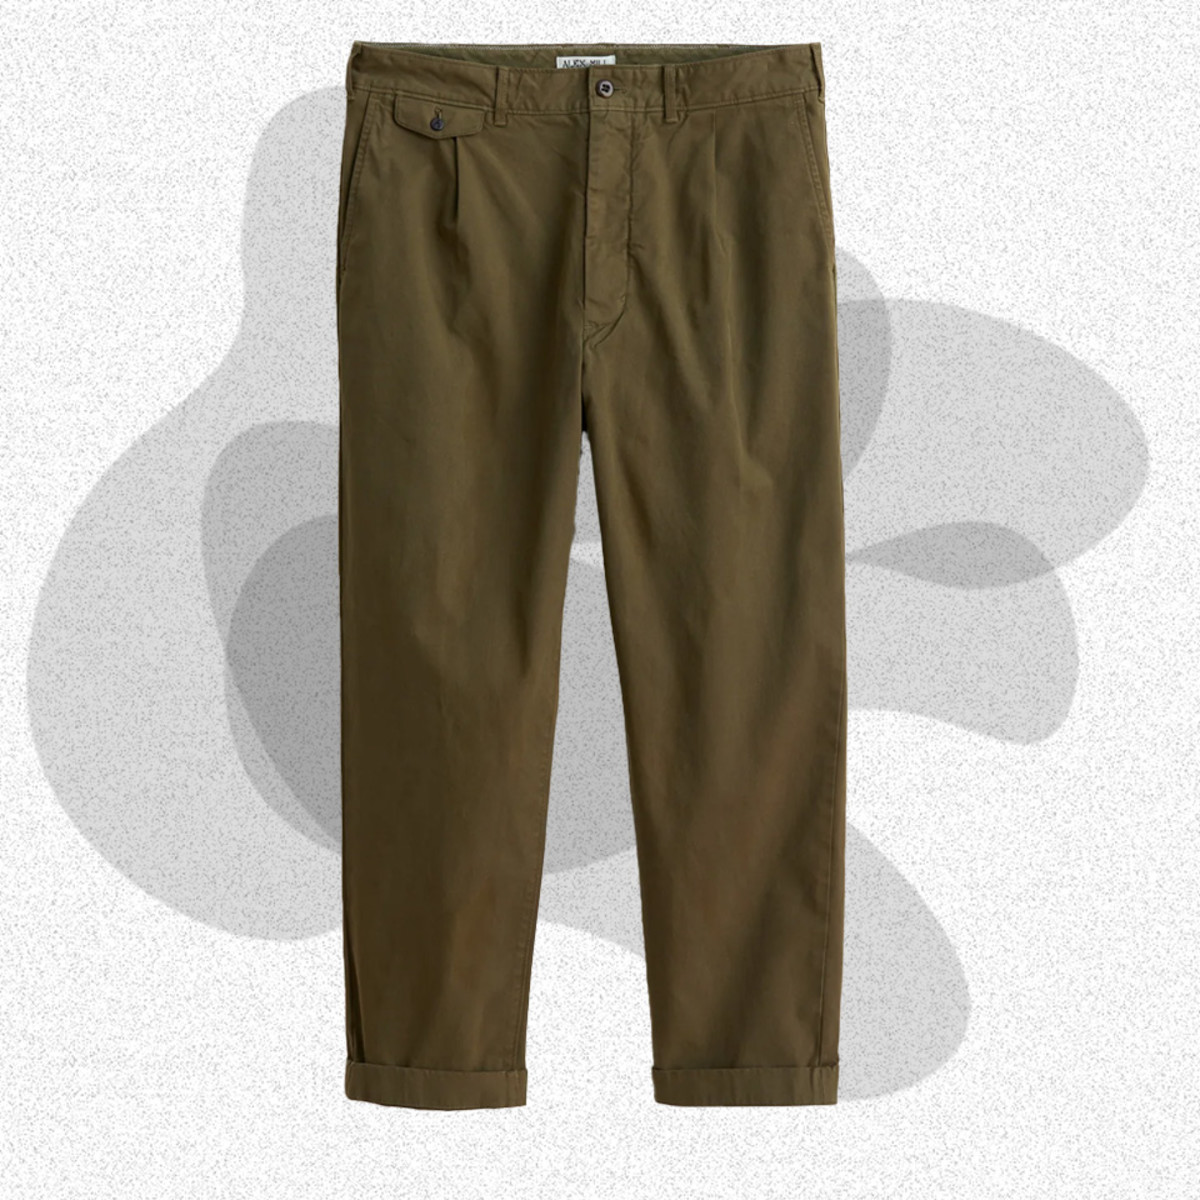 Buy Dockers Men's Comfort Khaki Upgrade Relaxed Fit Pleat Pant